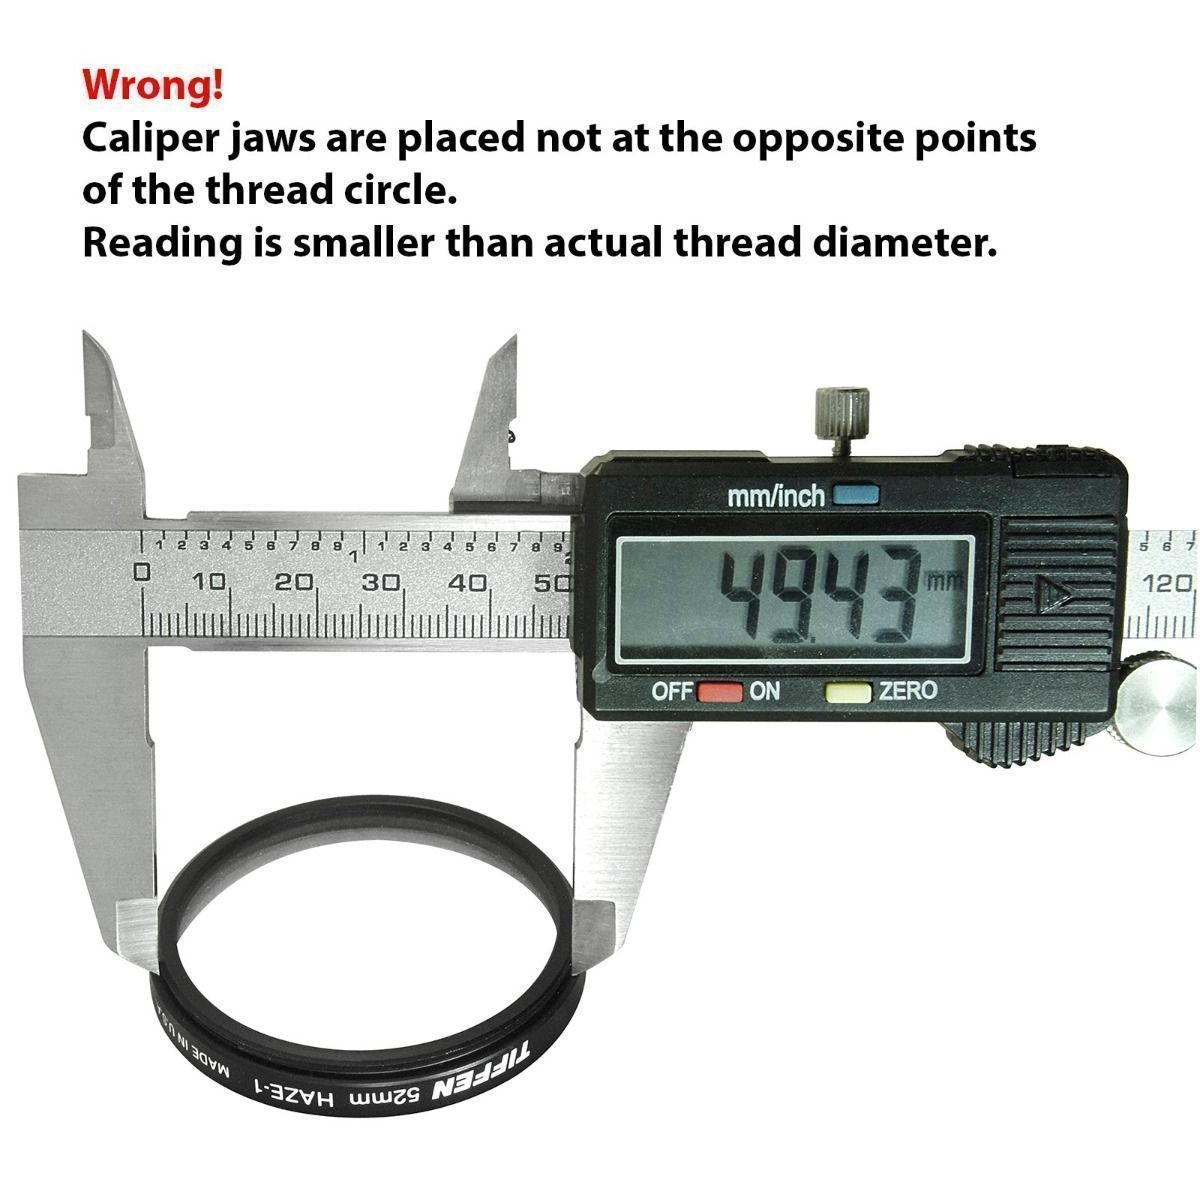 Wrong measurement